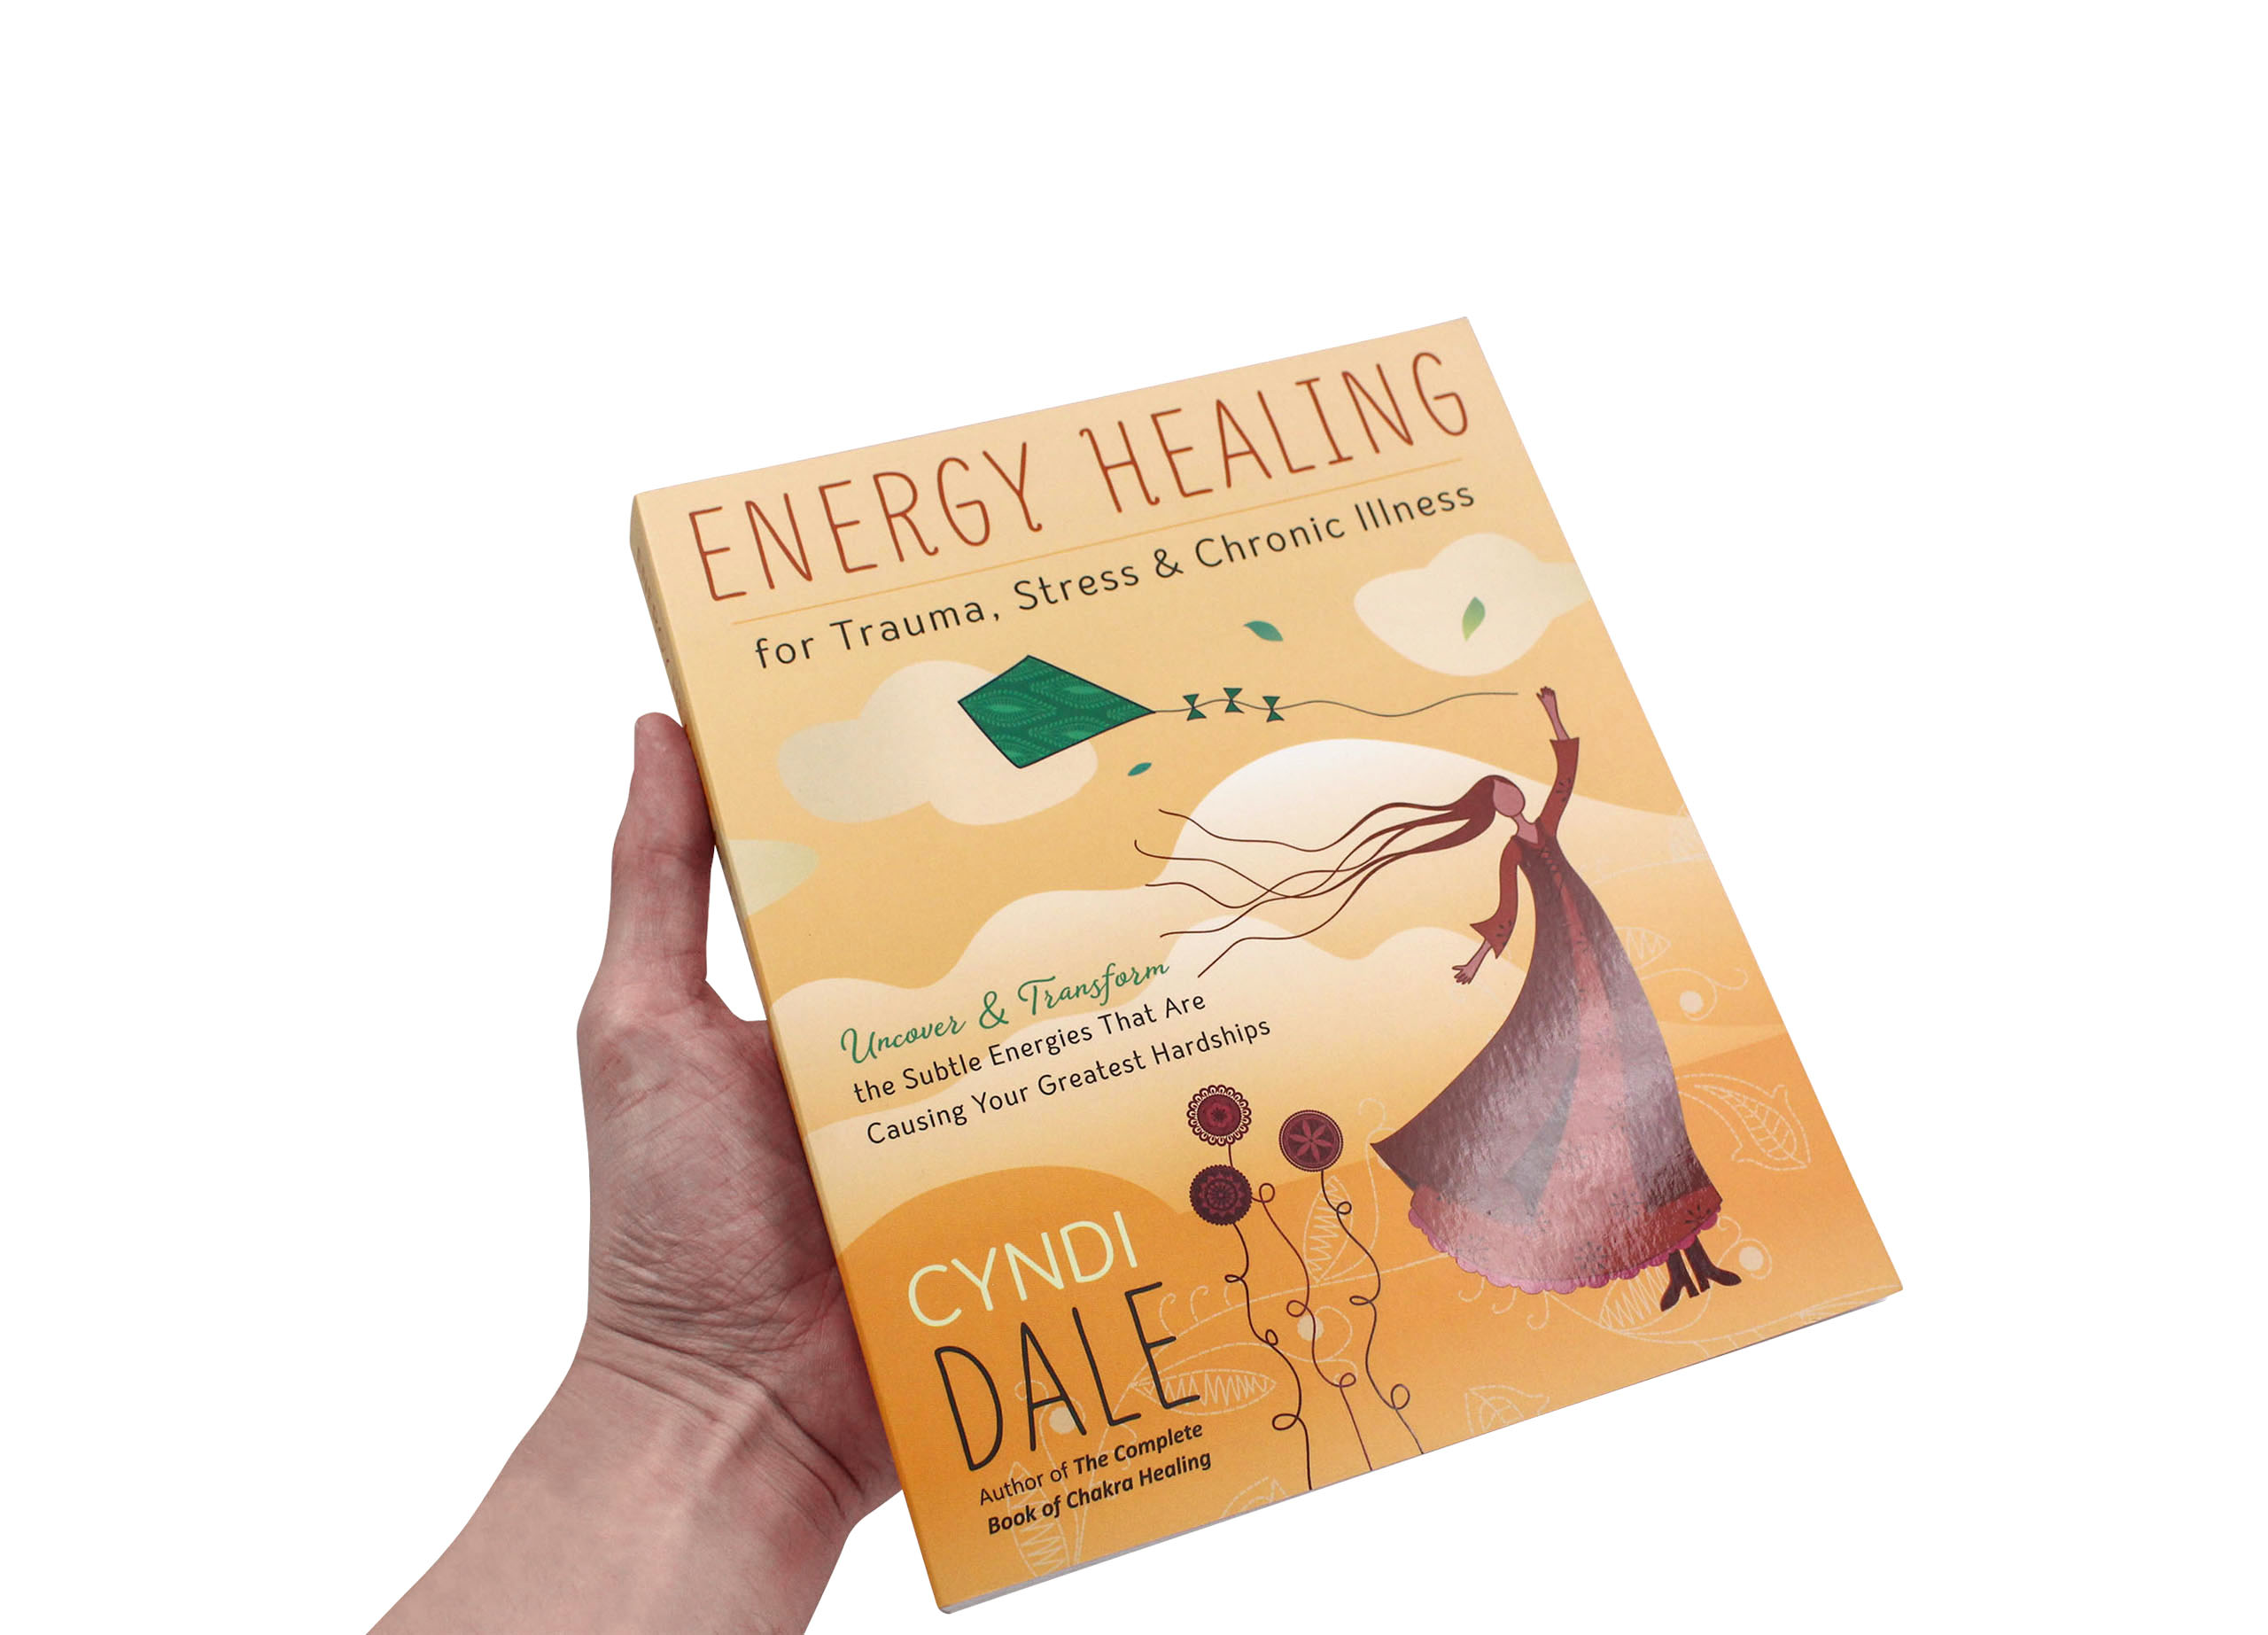 Energy Healing for Trauma, Stress and Chronic Illness Books